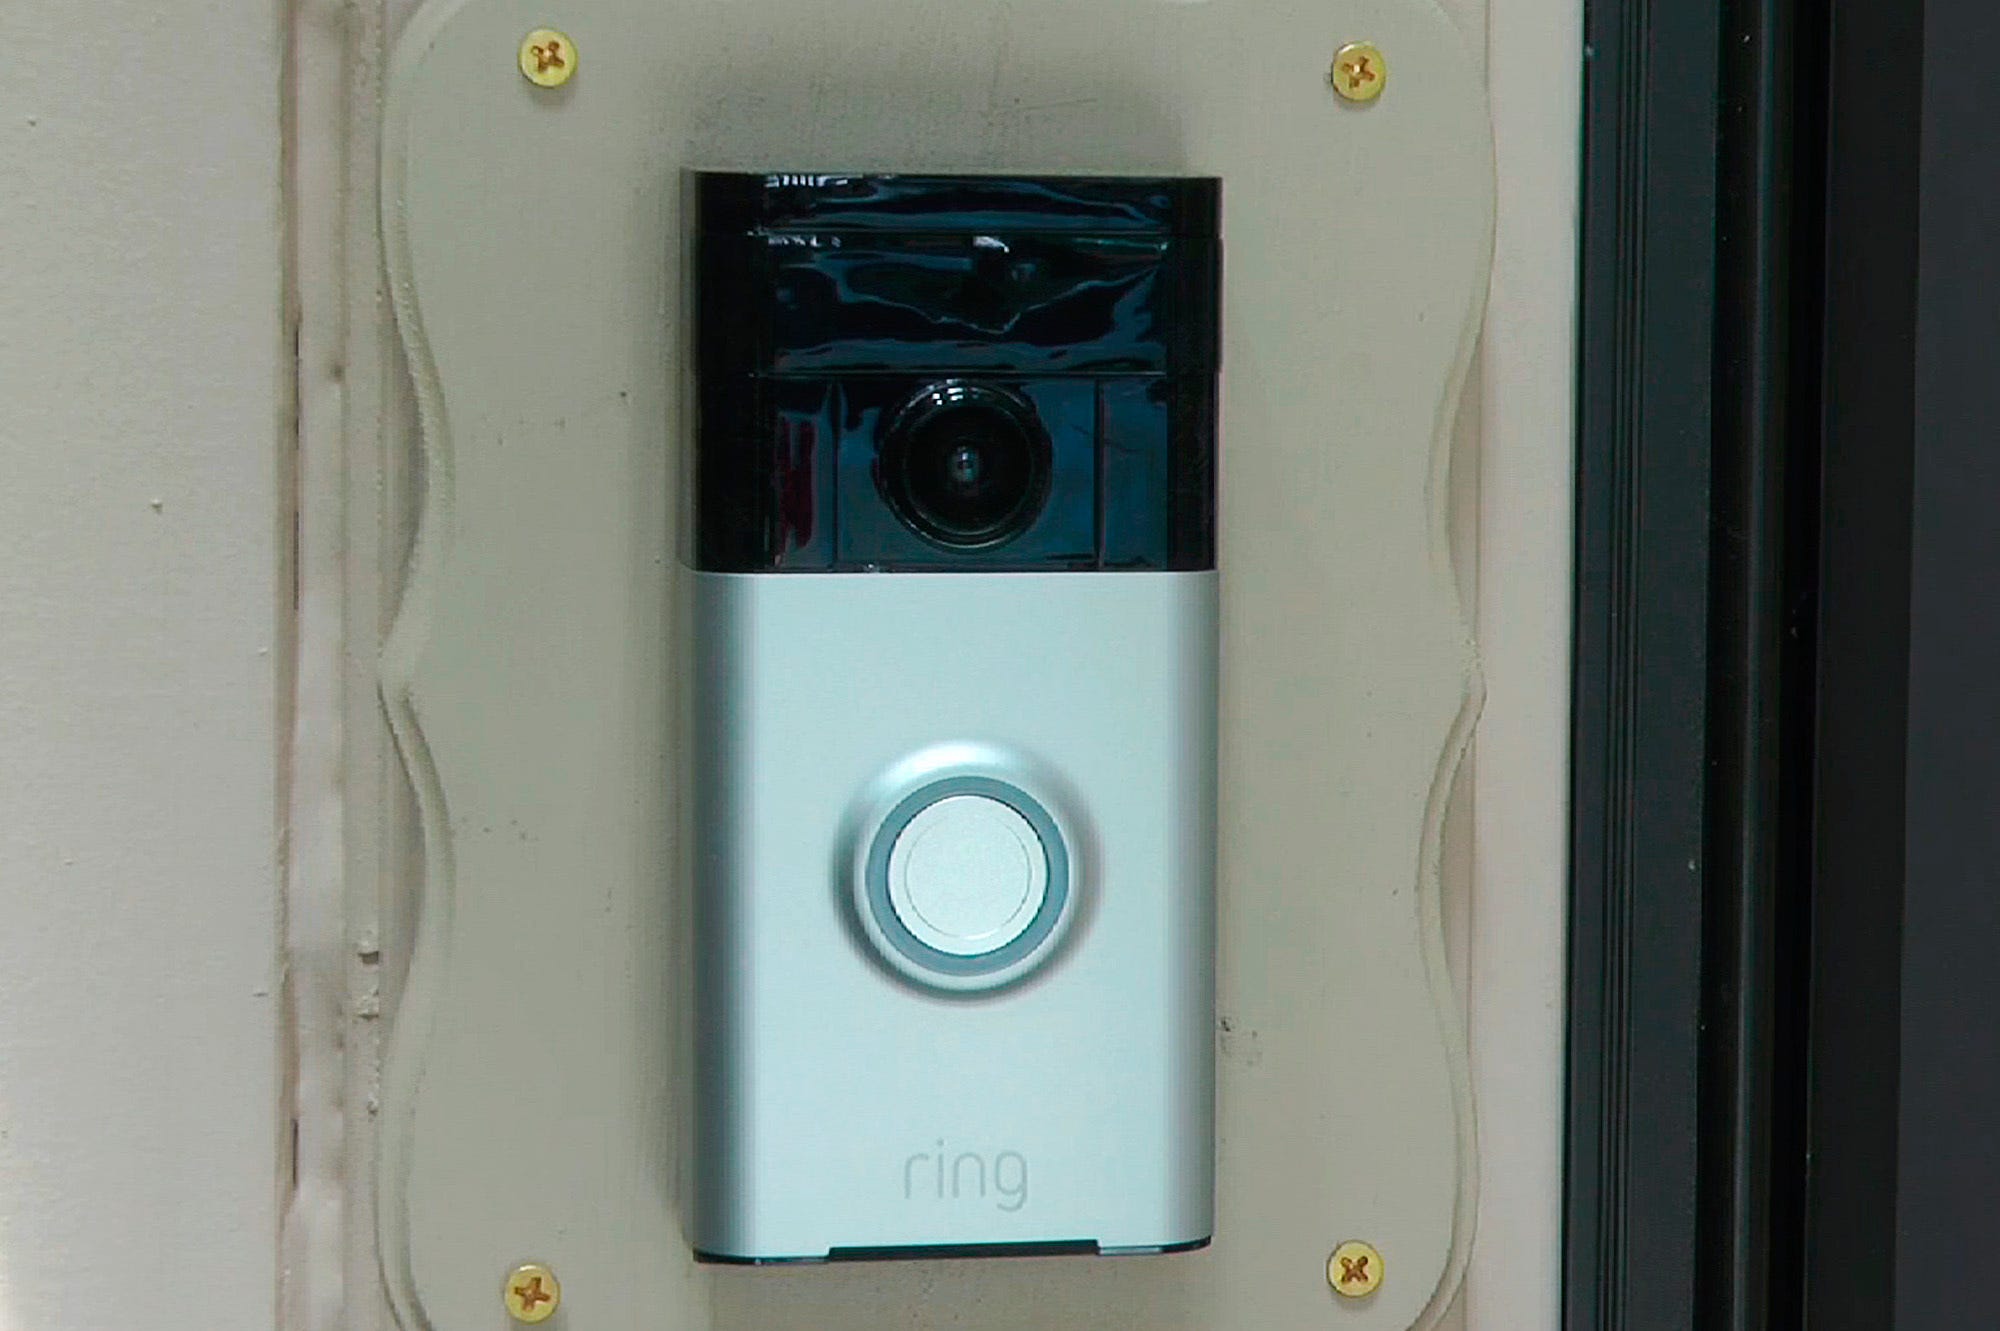 store ring doorbell video locally